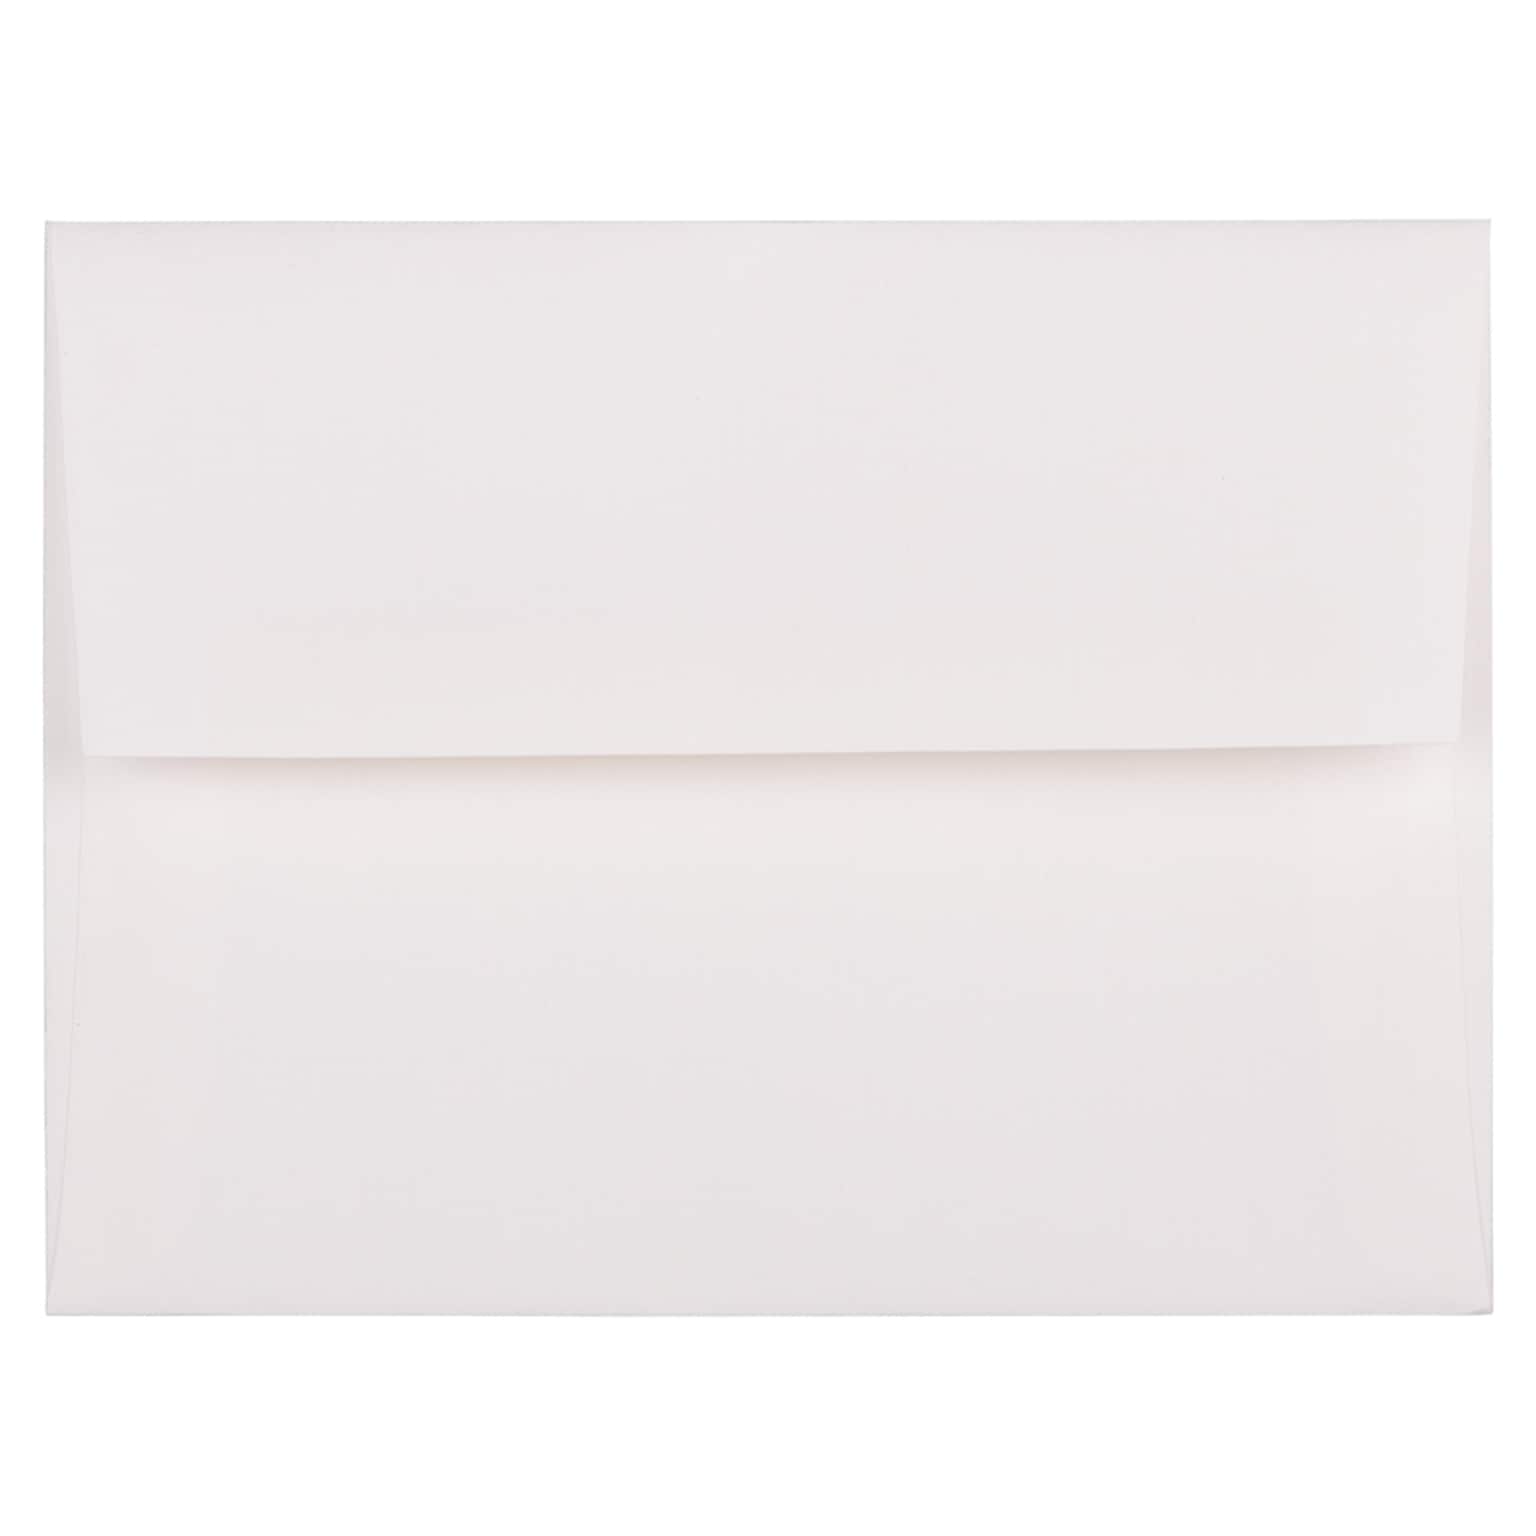 JAM Paper A2 Strathmore Invitation Envelopes, 4.375 x 5.75, Bright White Laid, Bulk 1000/Carton (99118B)